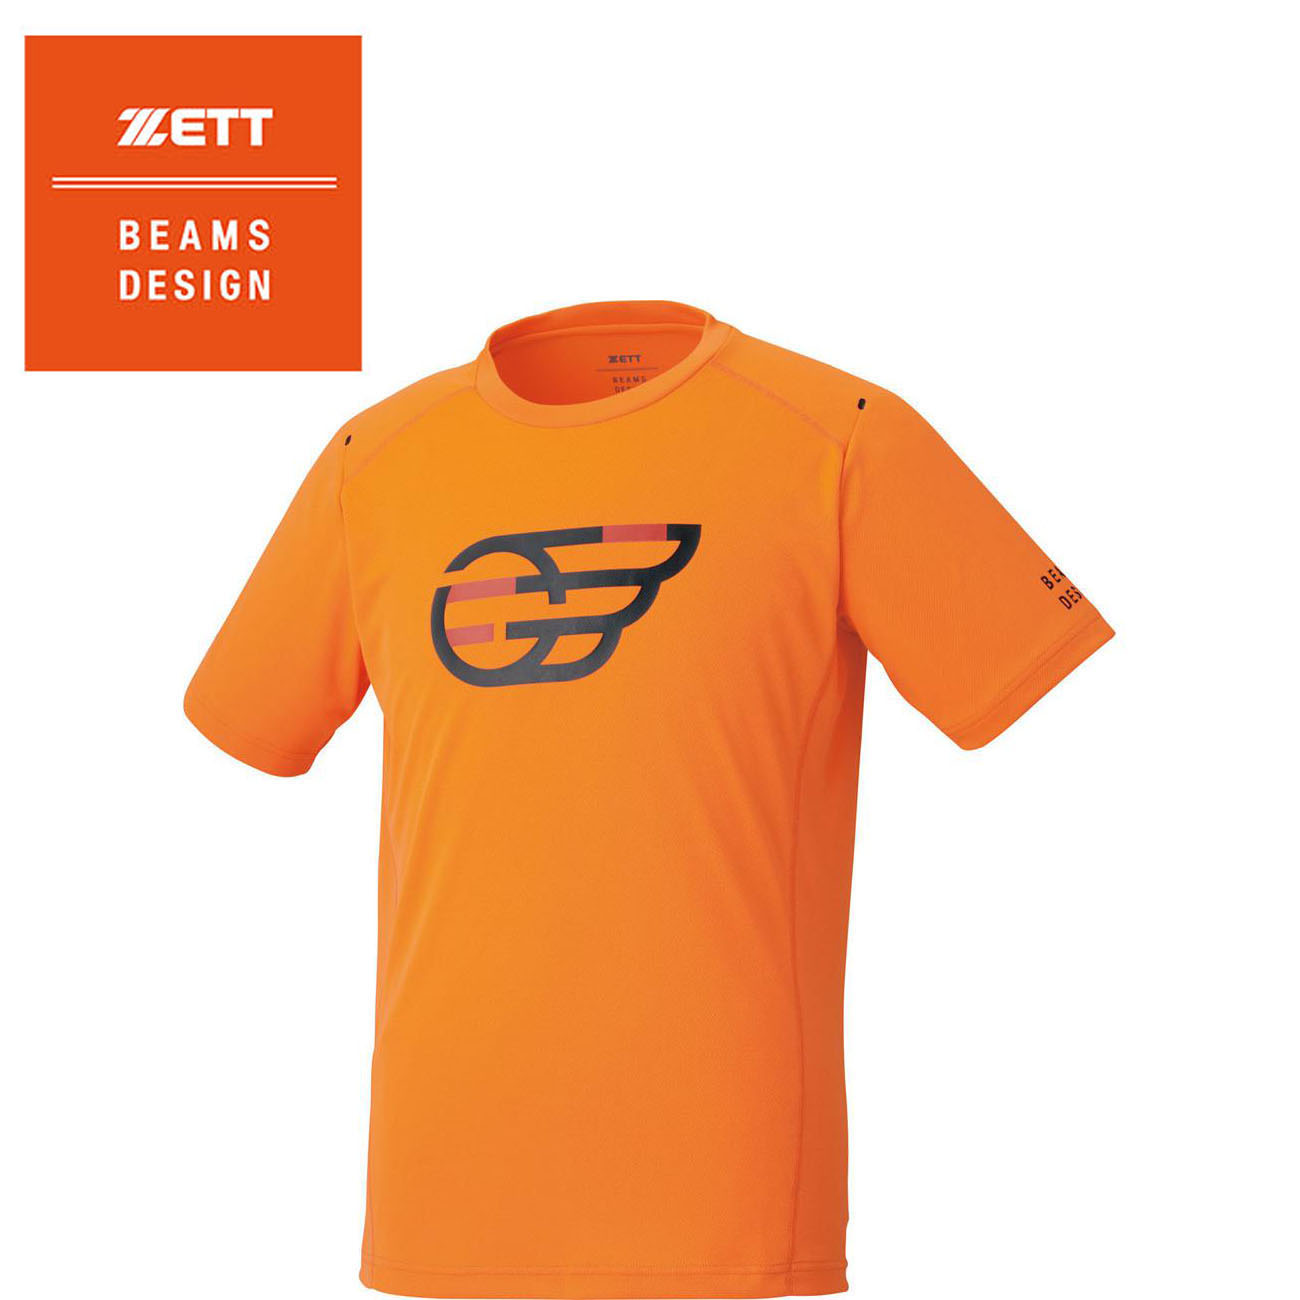 ZETT BEAMS DESIGN プロデュース Tシャツ